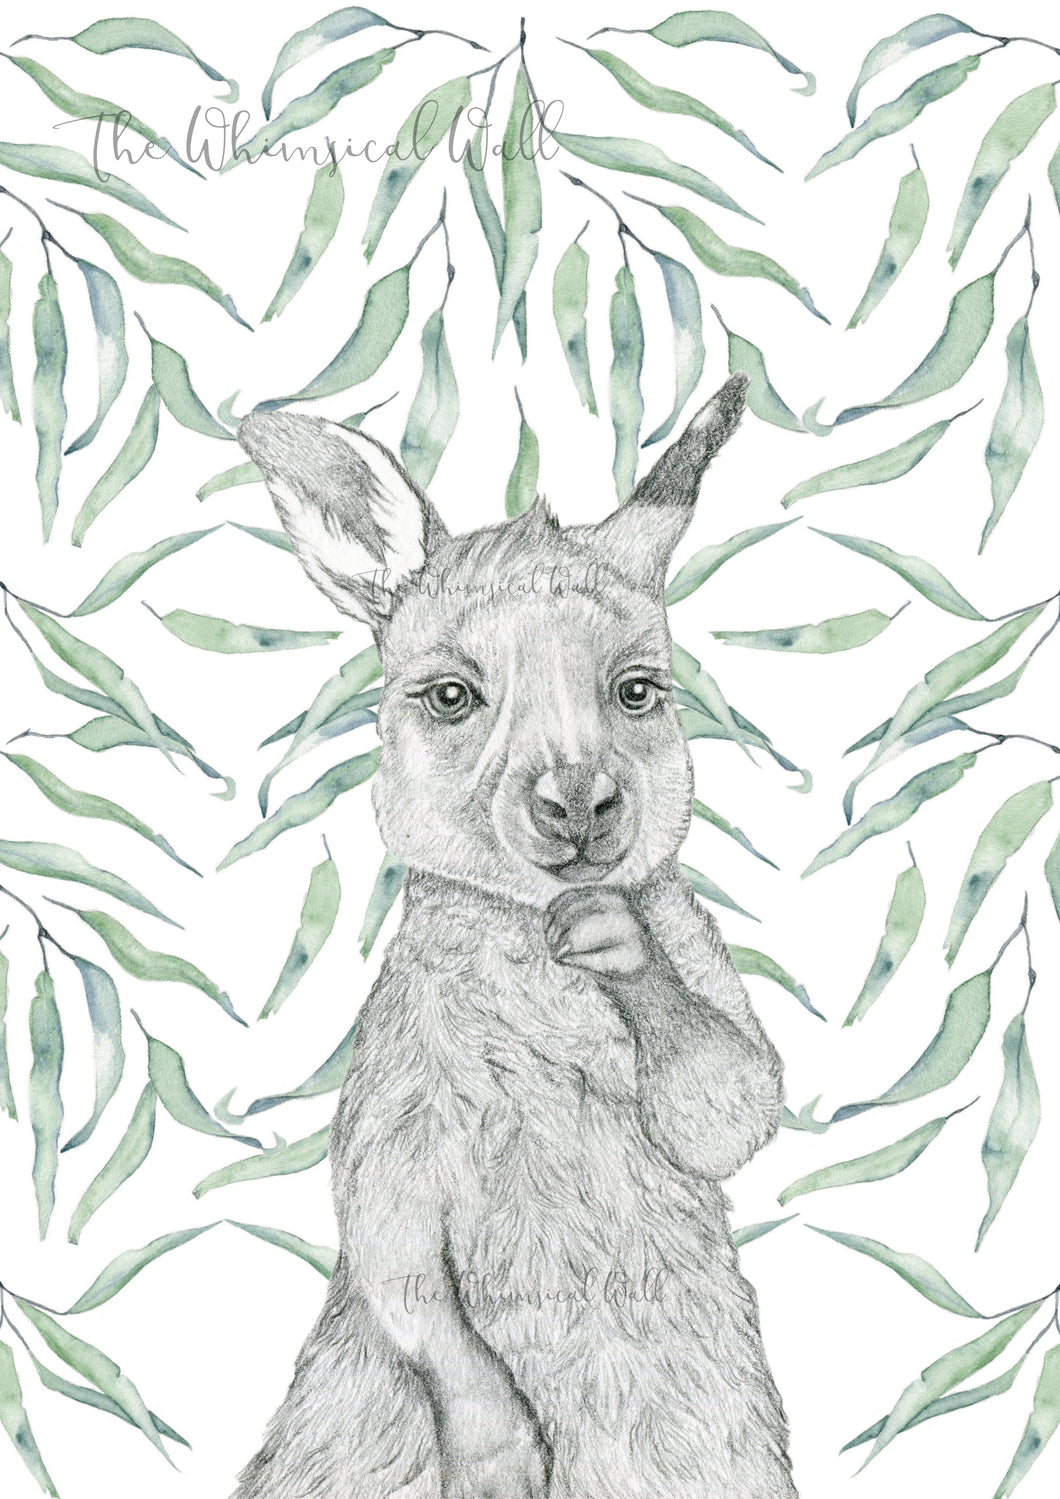 Kangaroo Joey with with gum leaves